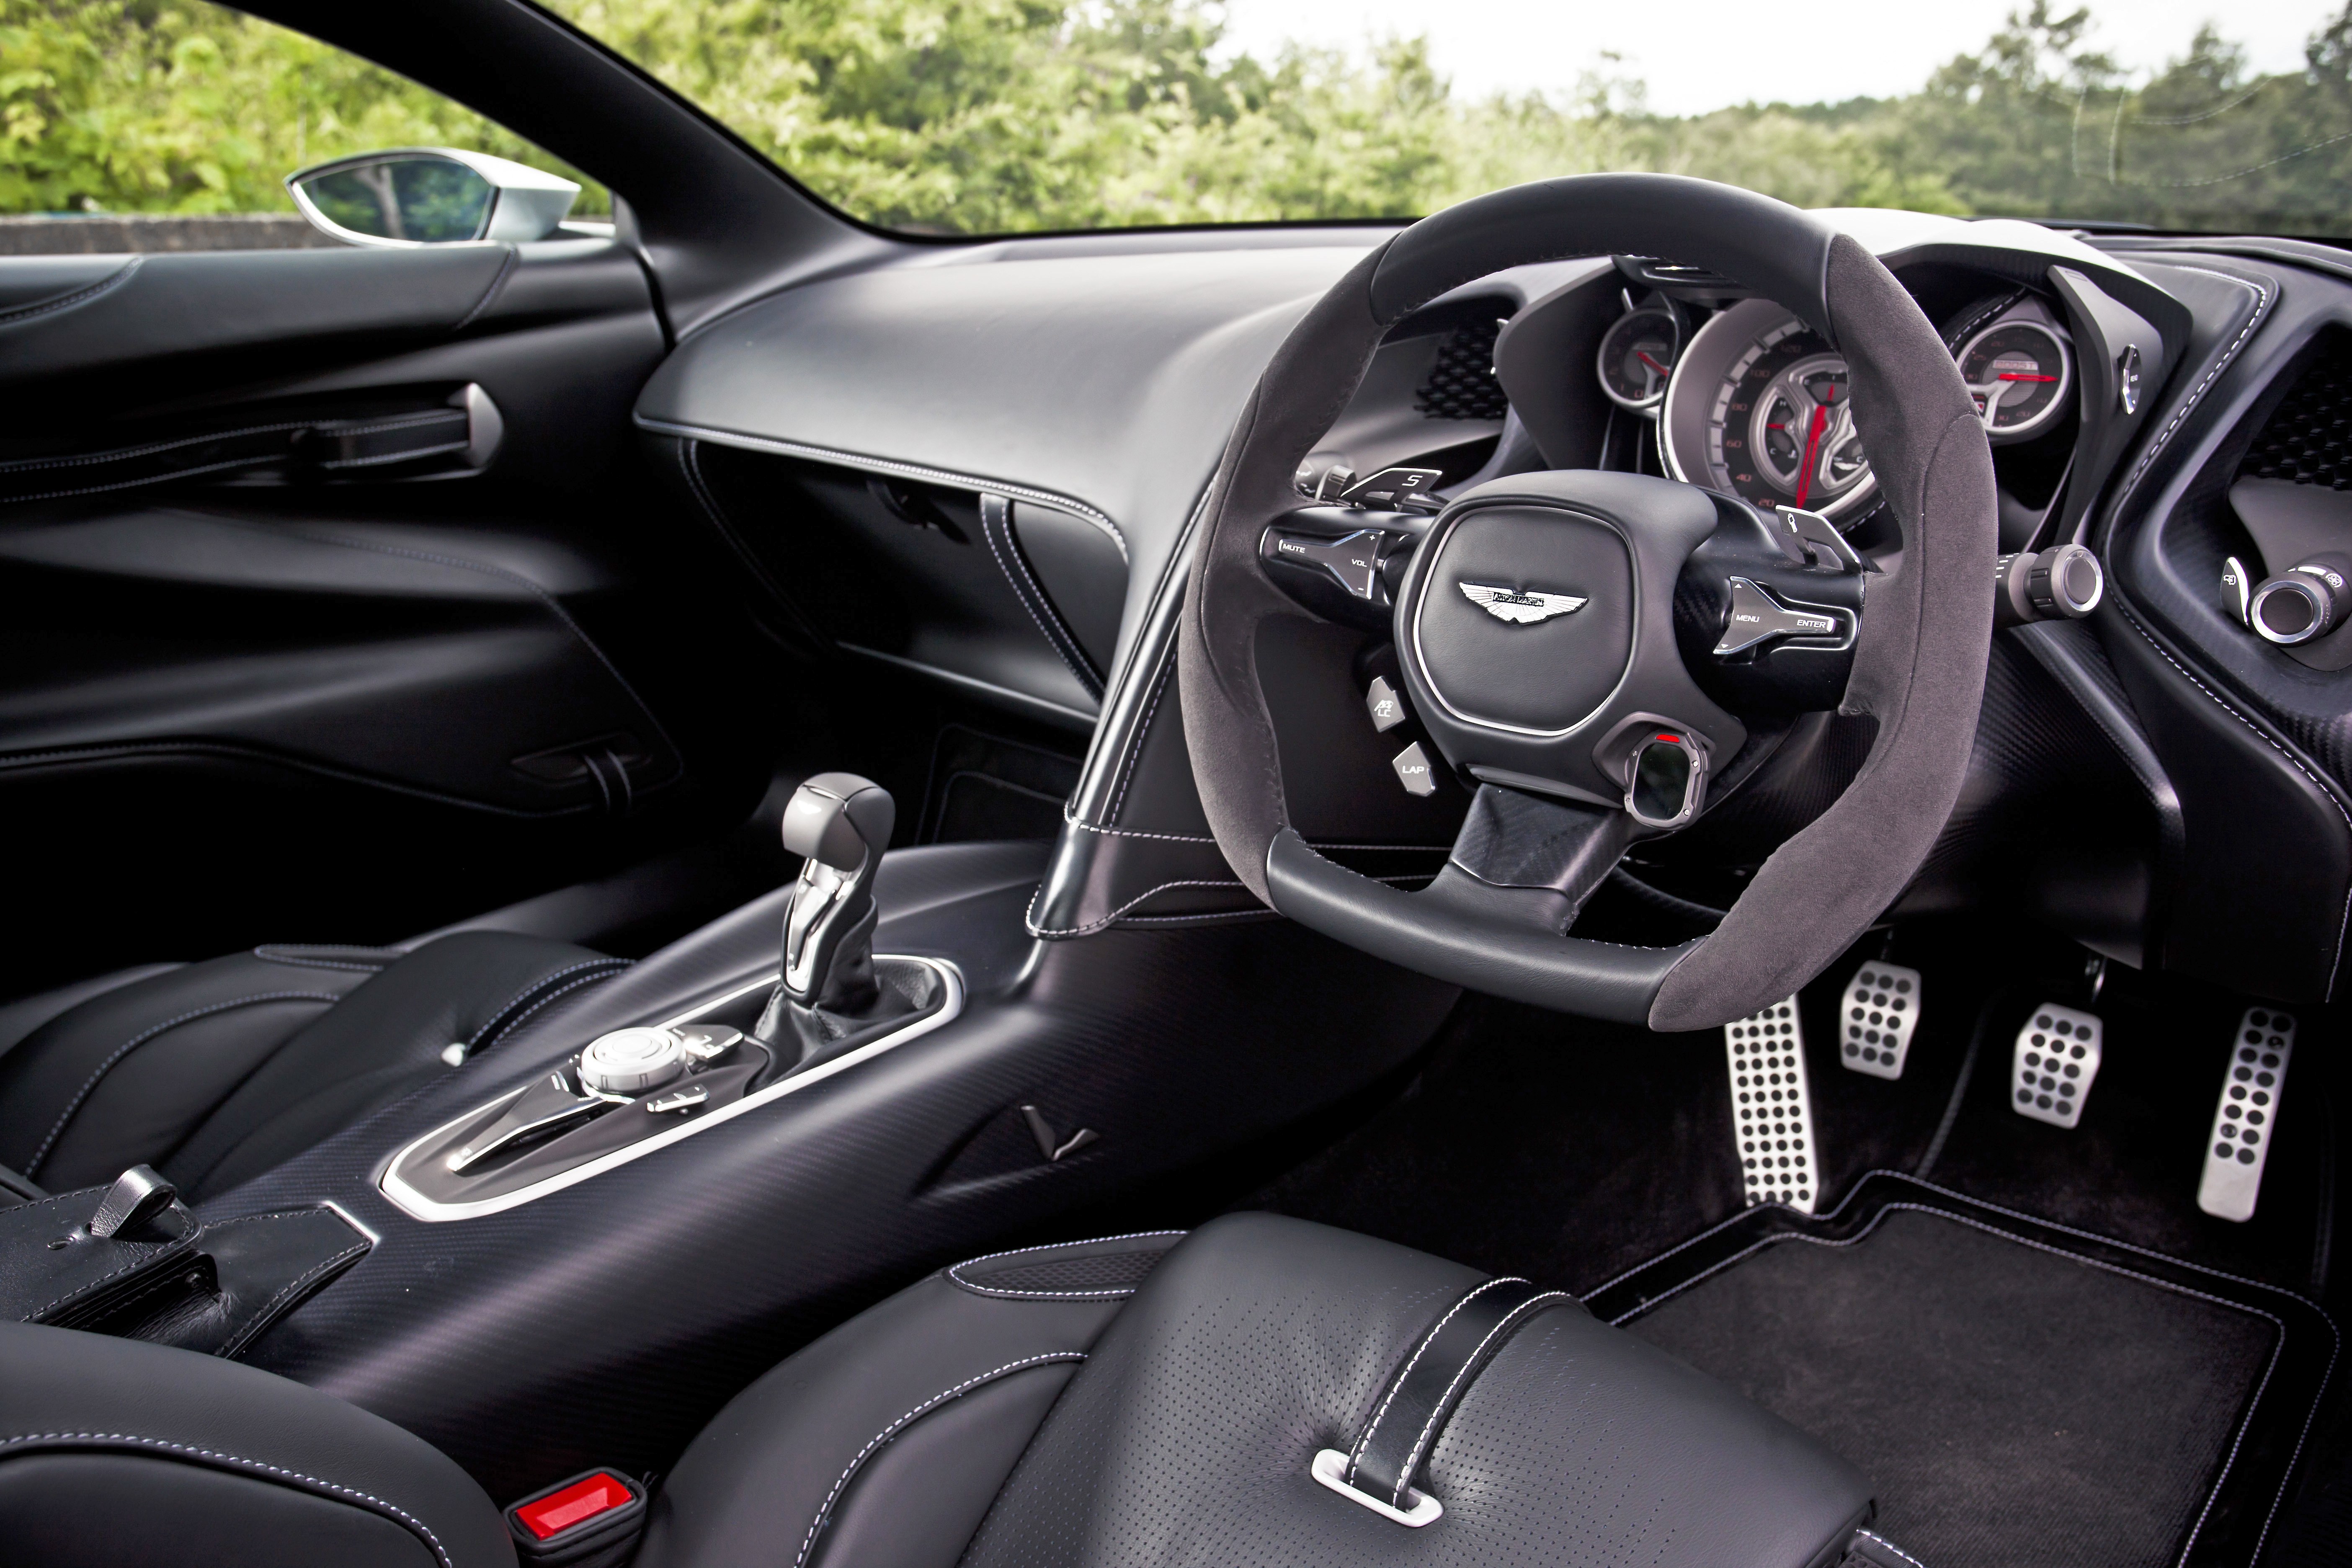 New Vantage? - Page 18 - Aston Martin - PistonHeads